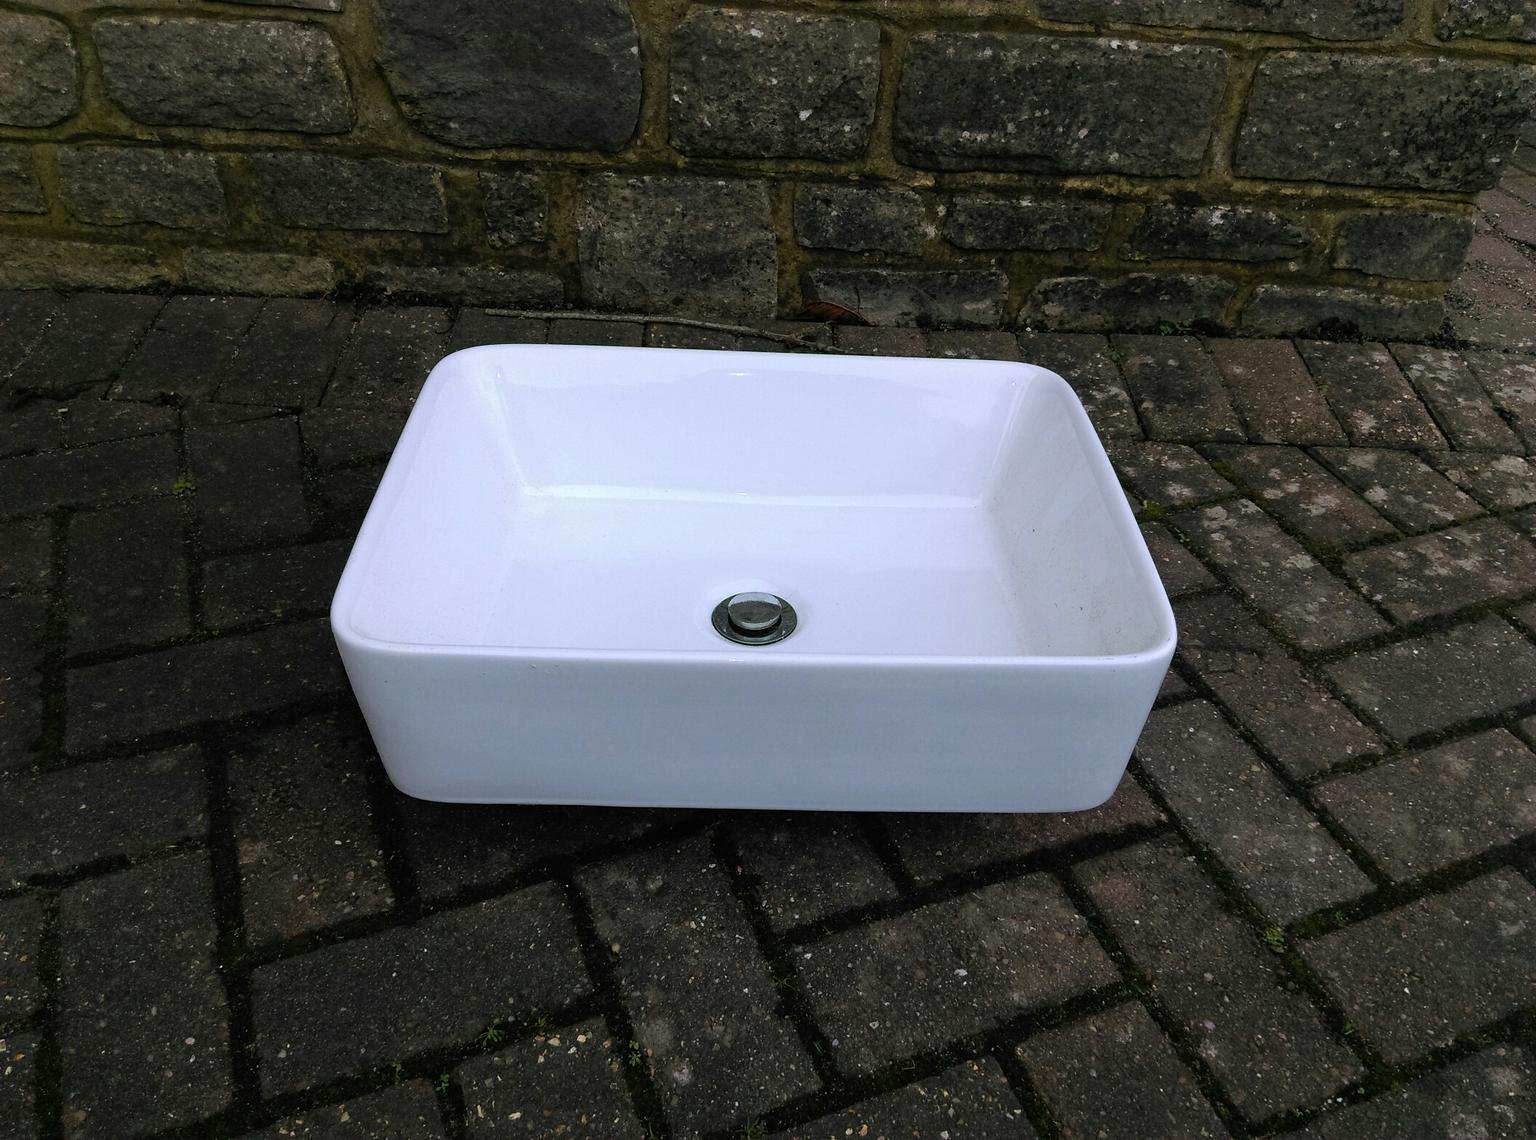 Mini Belfast Sink In Dt3 Portland For 15 00 For Sale Shpock